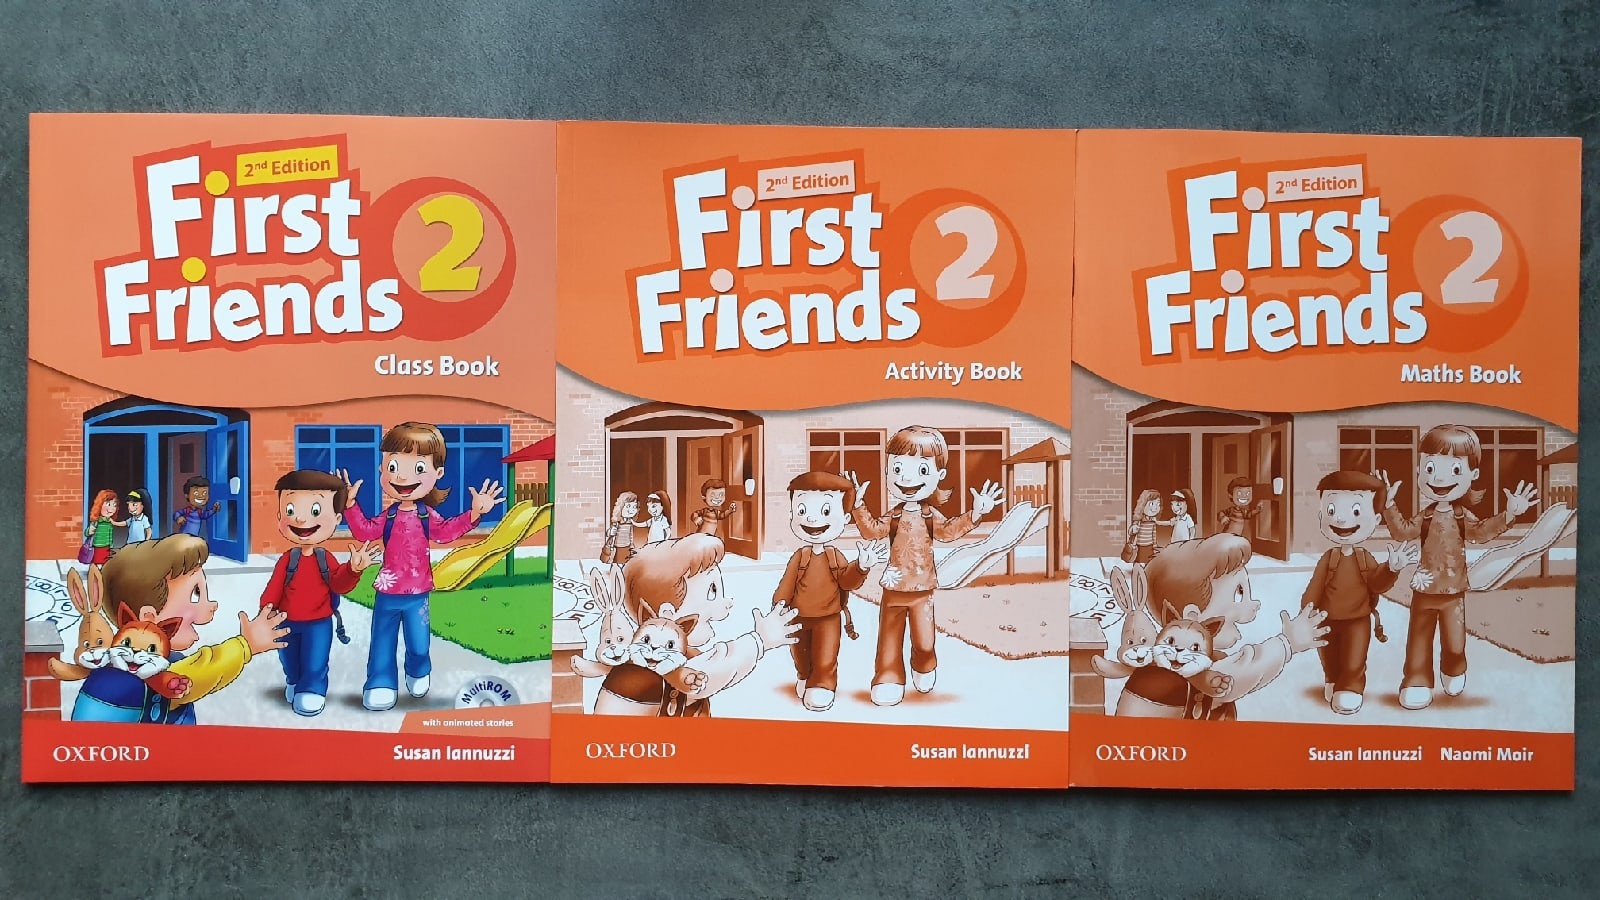 Activity book 3 класс 2 часть. First friends 2 class book. First friends 2 activity book. First friends 1,2,3. First Explorers. Class book 2.